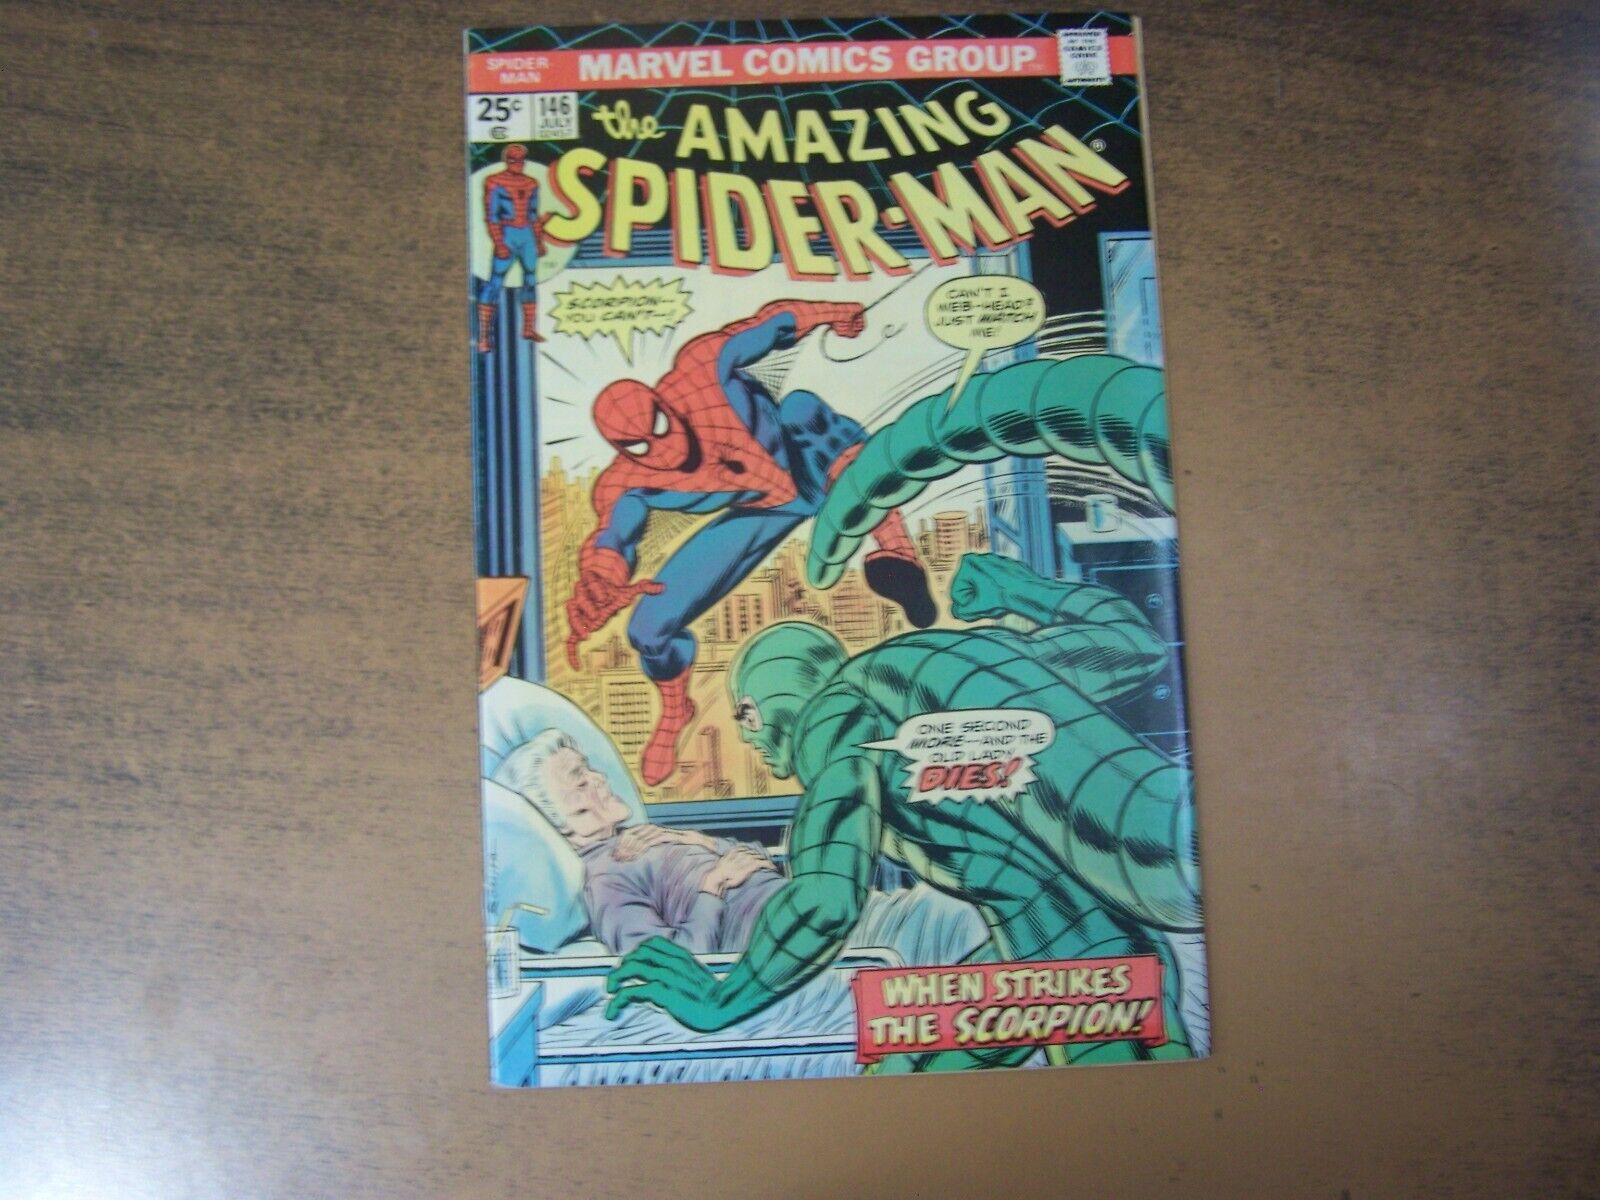 The Amazing Spider-man #146